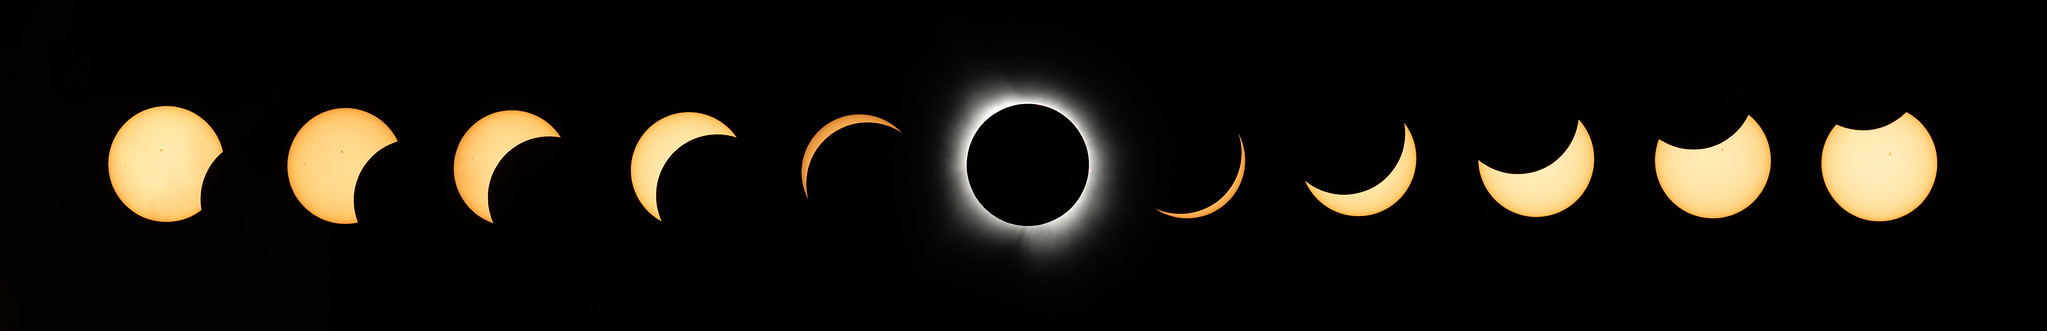 progression of eclipse